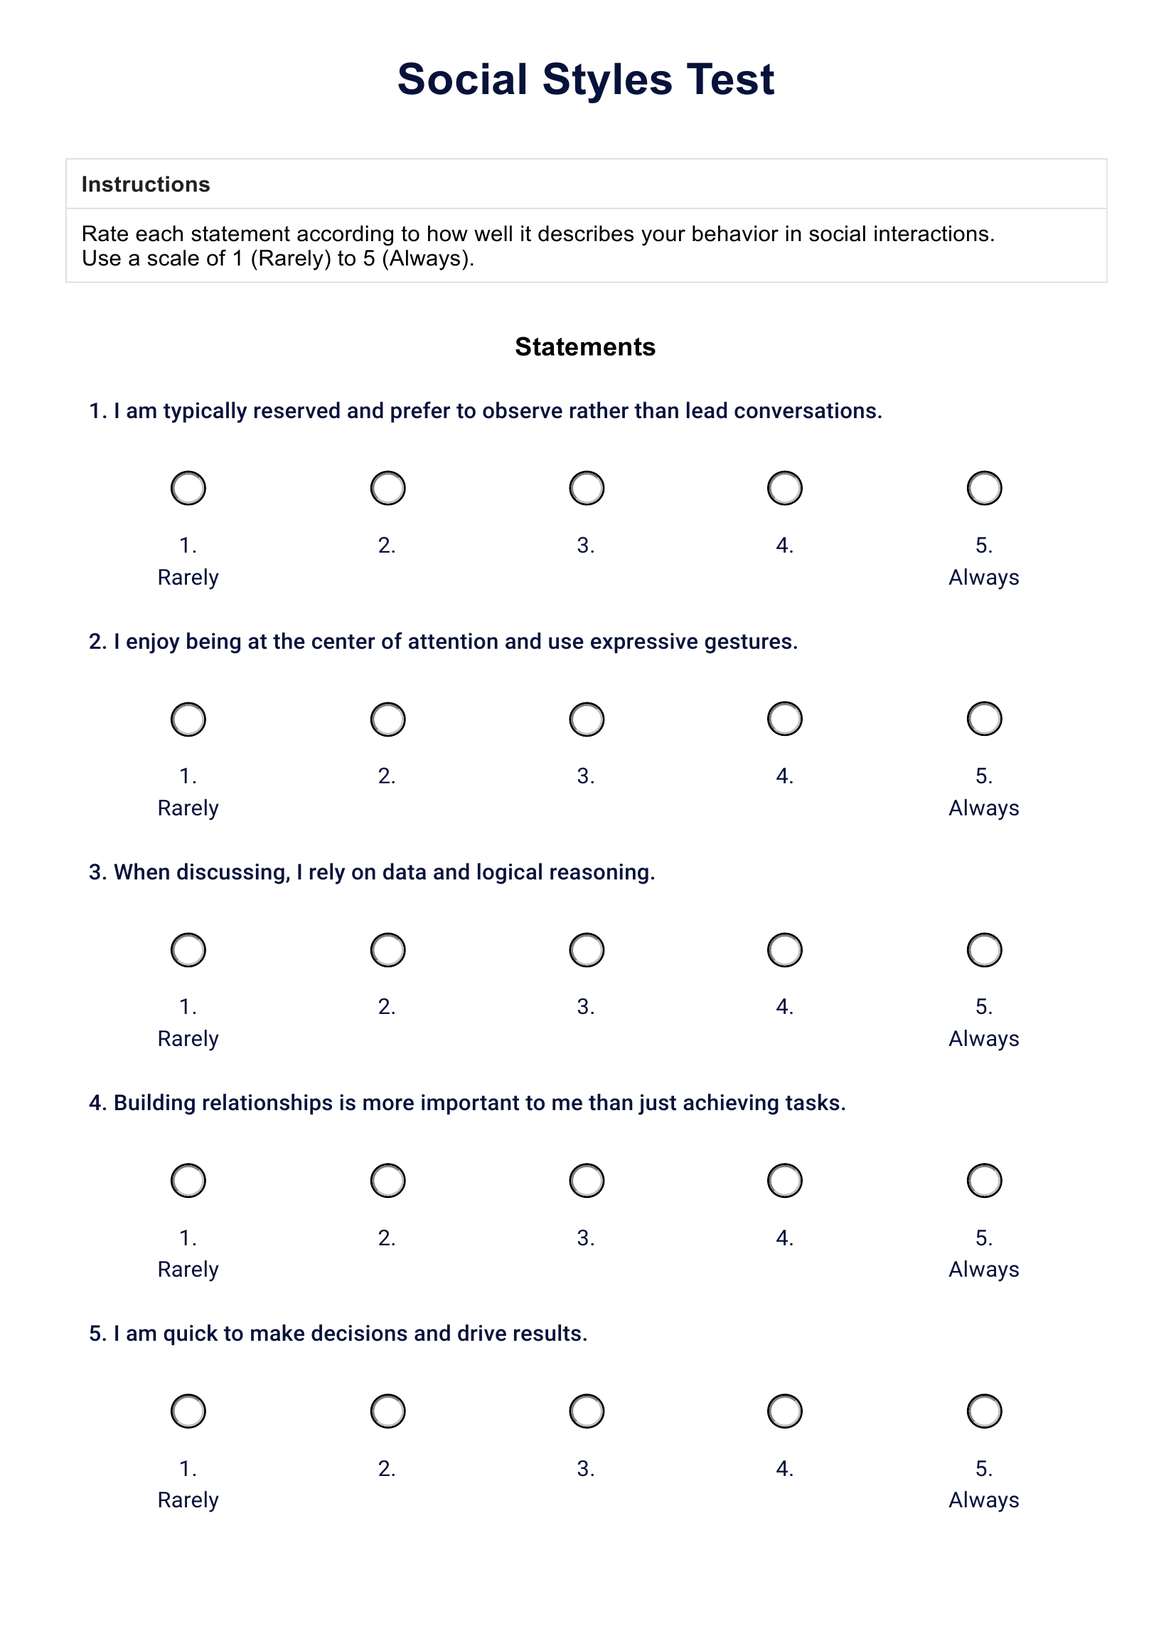 Social Styles Test PDF Example